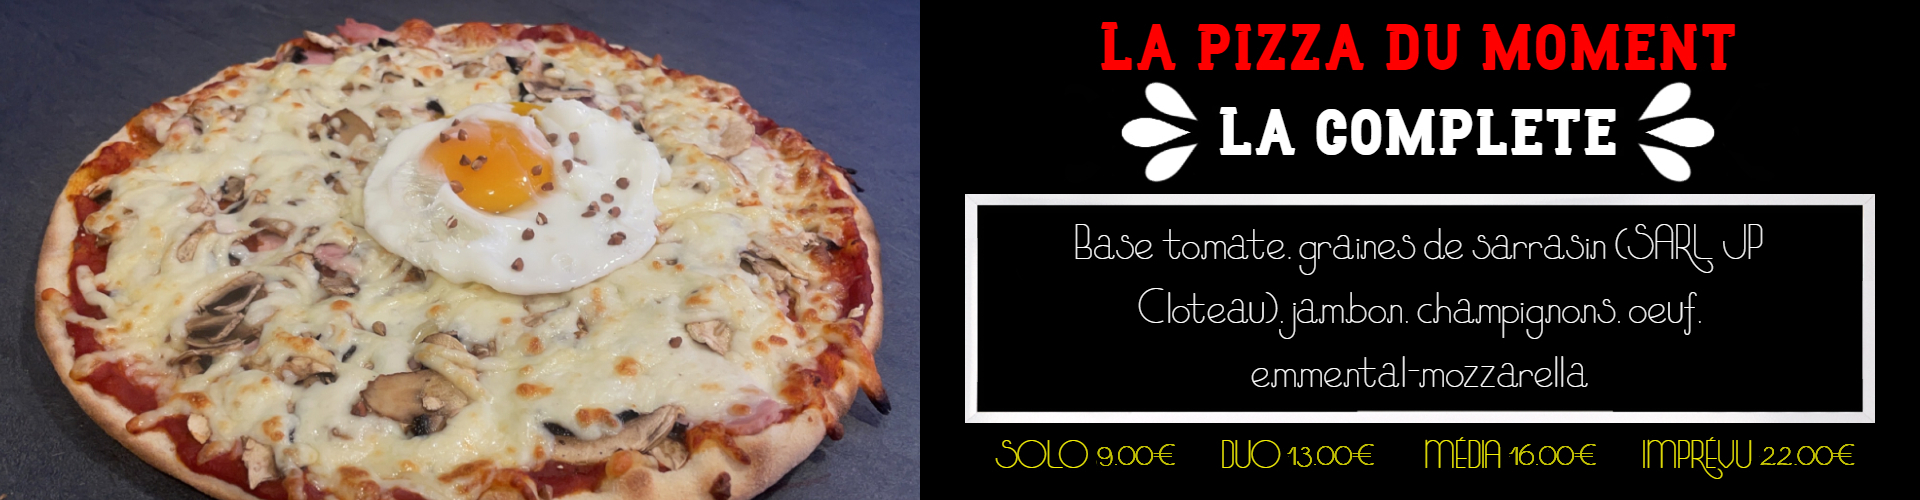 pizza-la-complete-moulin-a-pizzas-bain-de-bretagne-5